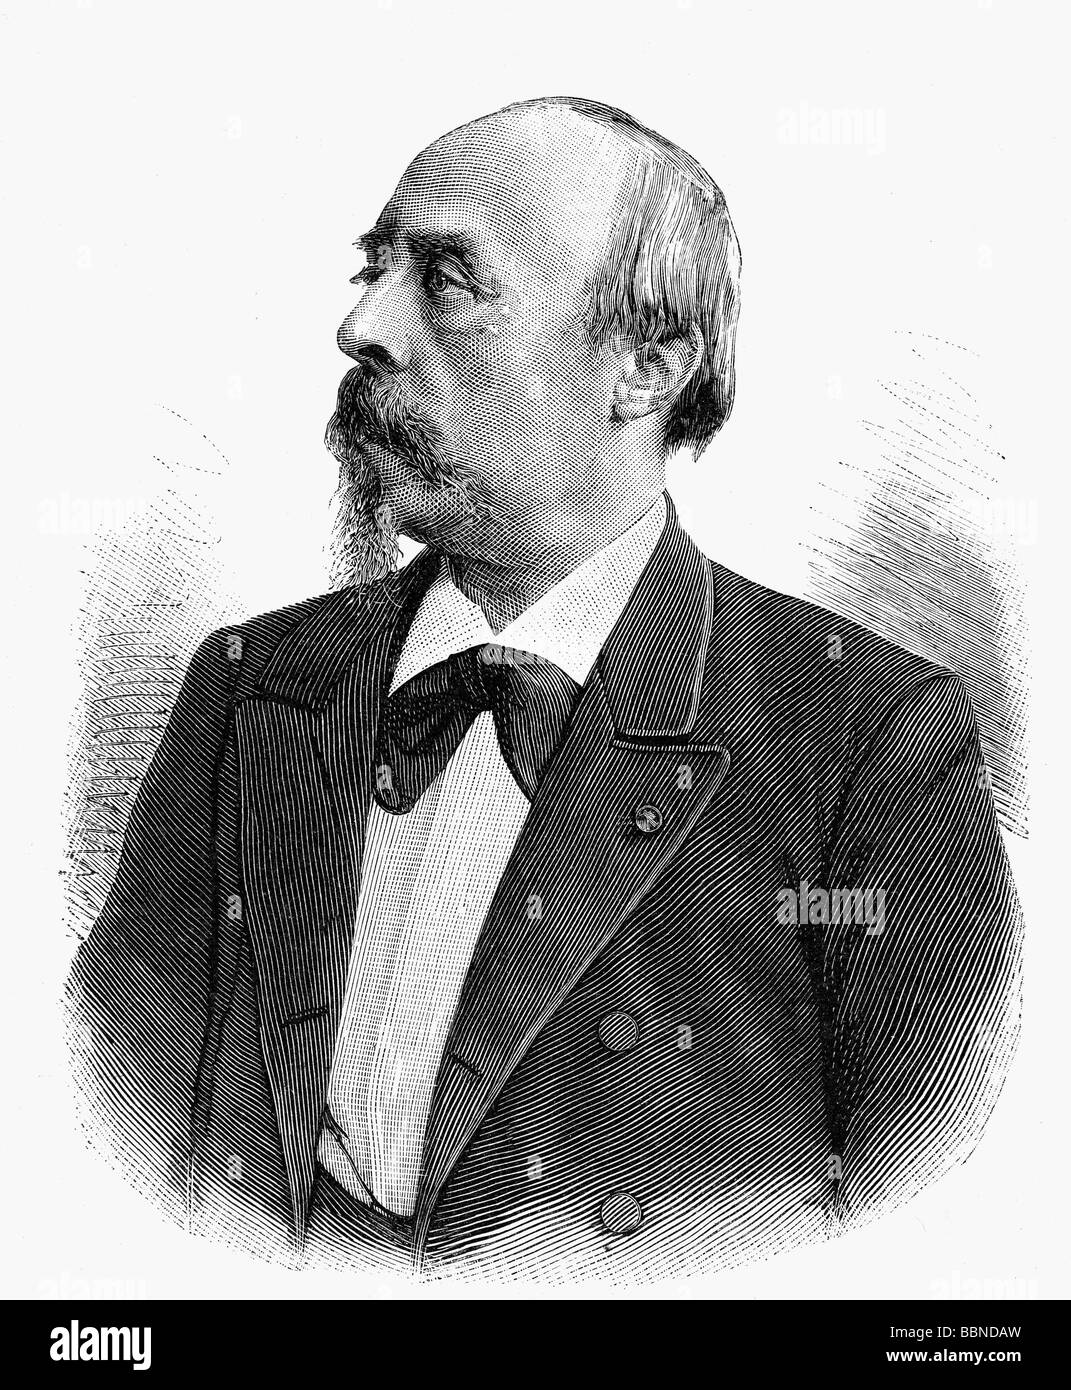 Bülow, Hans Freiherr von, 8.1.1830 - 12.2.1894, German musician (pianist and conductor), portrait, wood engraving after photography by C. Brasch, 19th century, Stock Photo